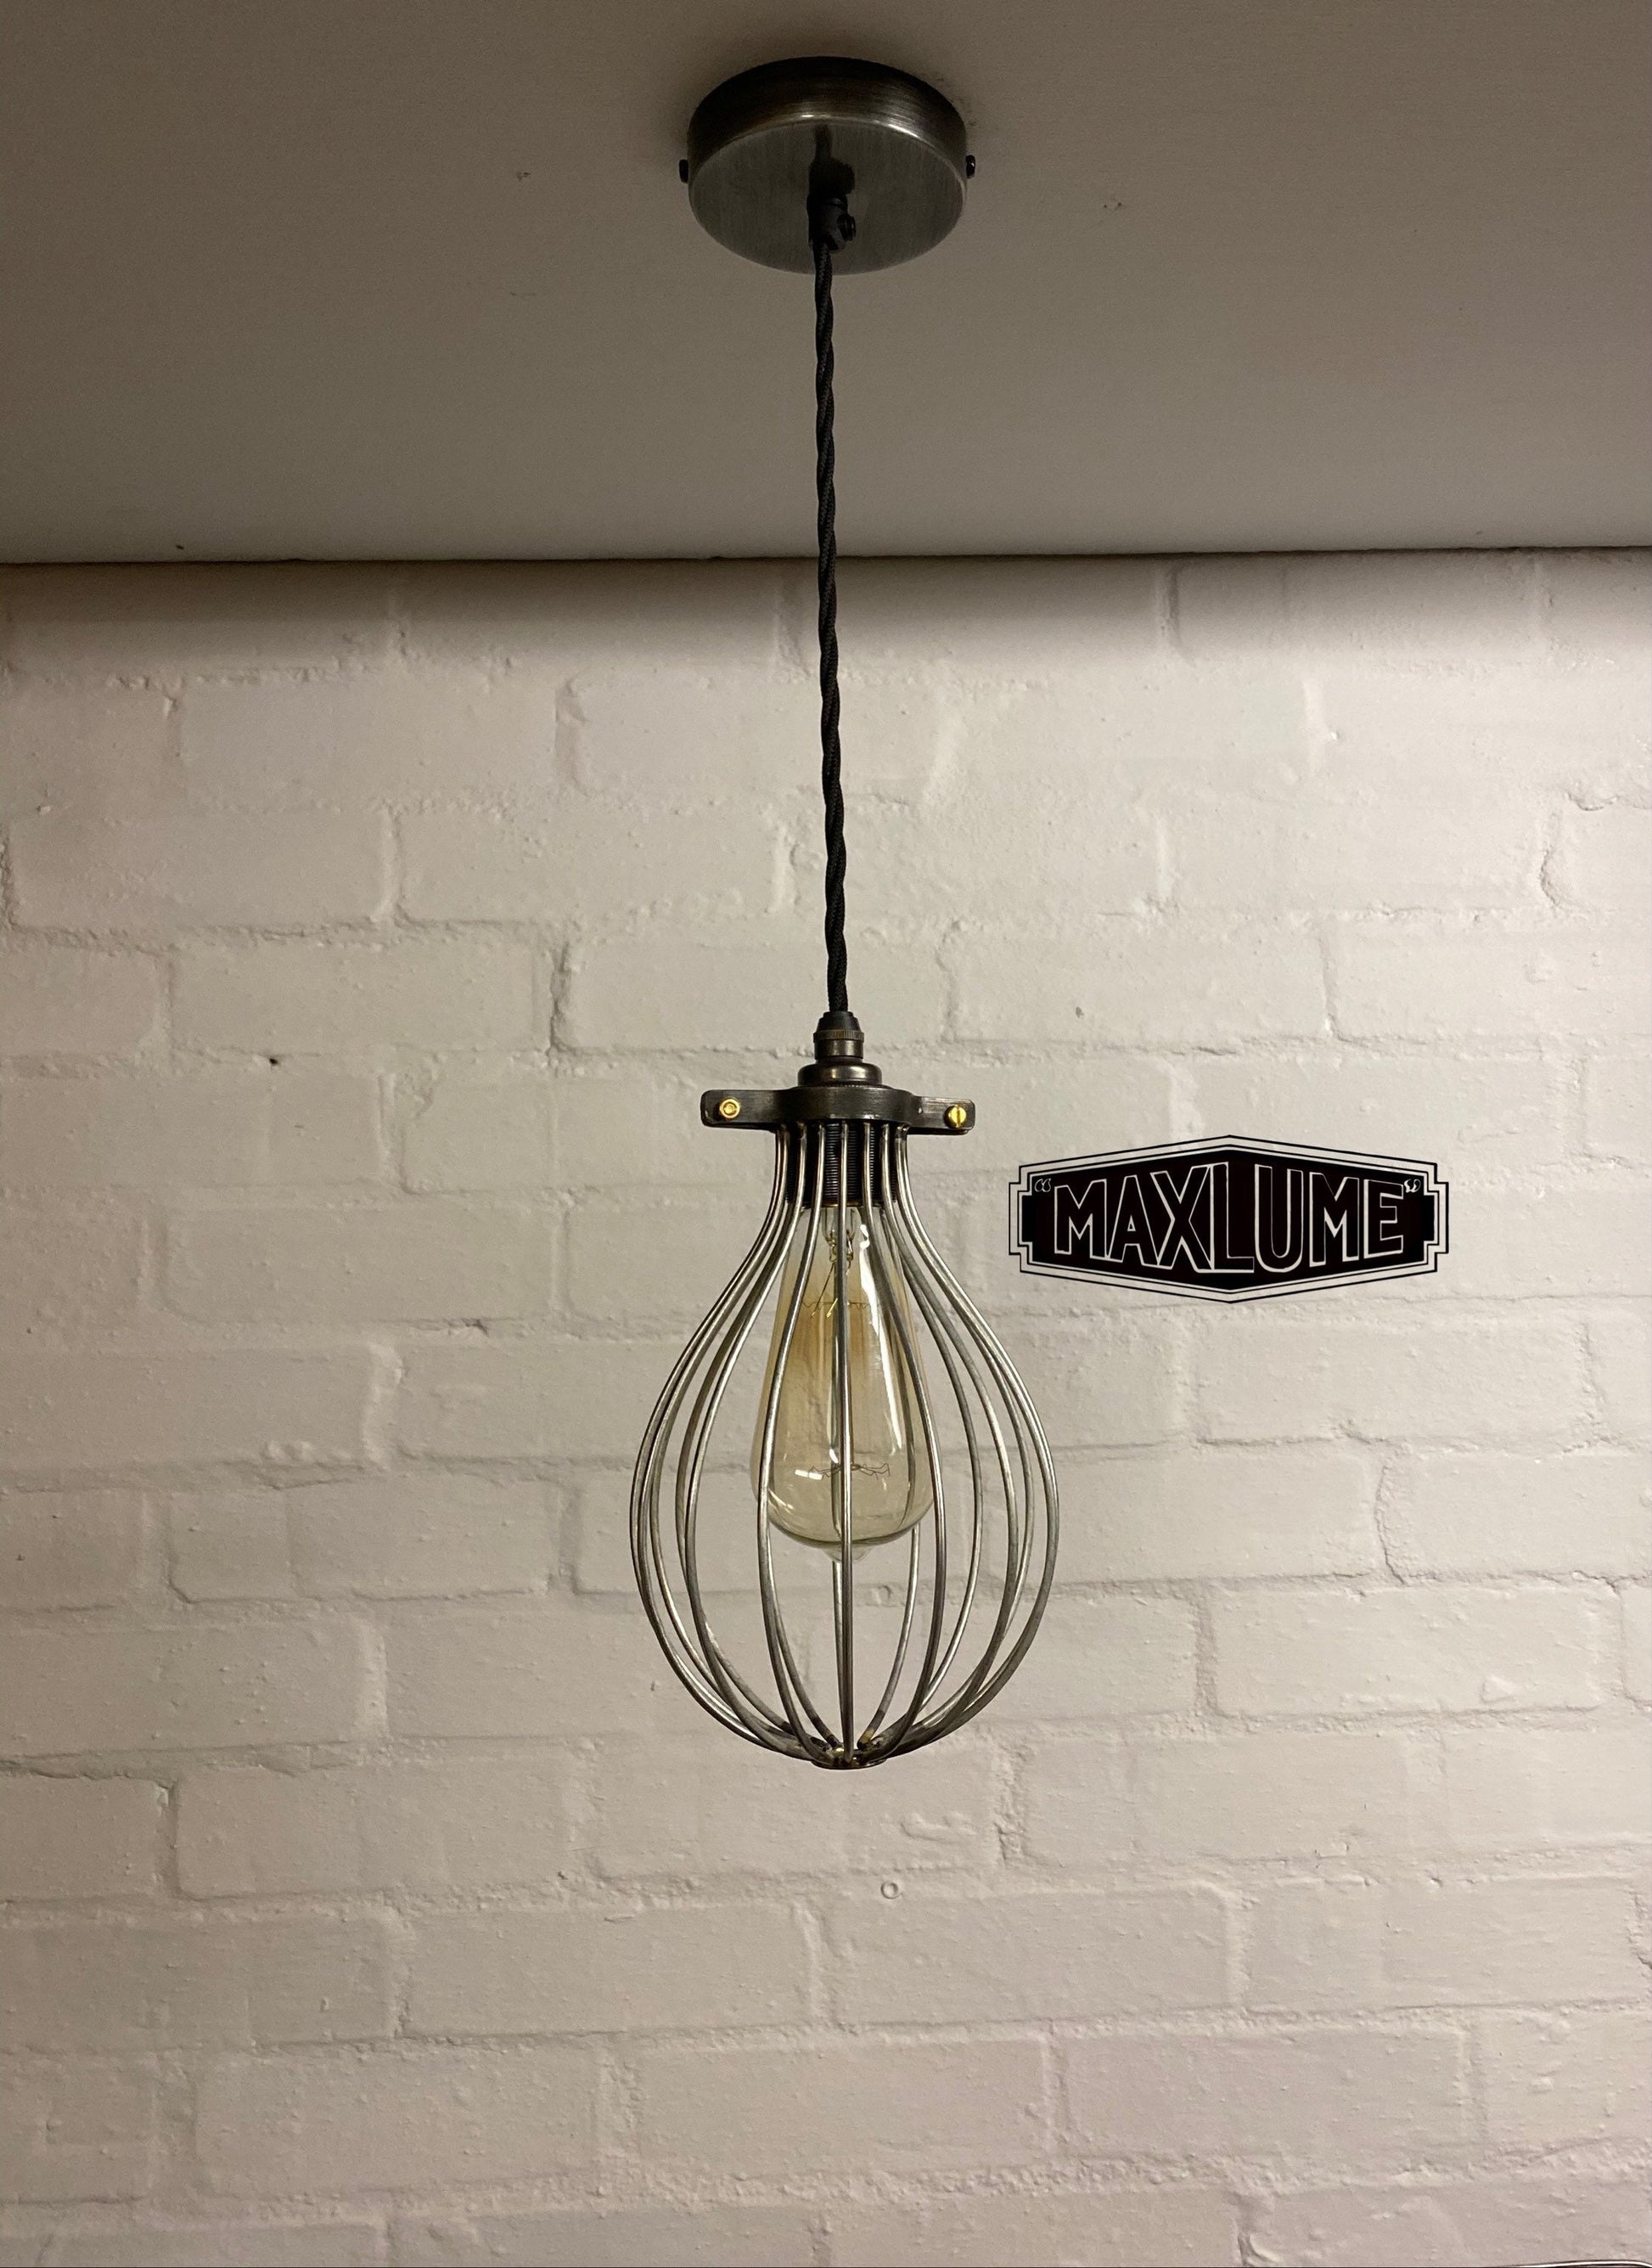 Buxton ~ Maxlume Industrial Balloon Cage Pendant Set Light | Ceiling Dining Room | Kitchen Table | Vintage Edison Filament Bulb